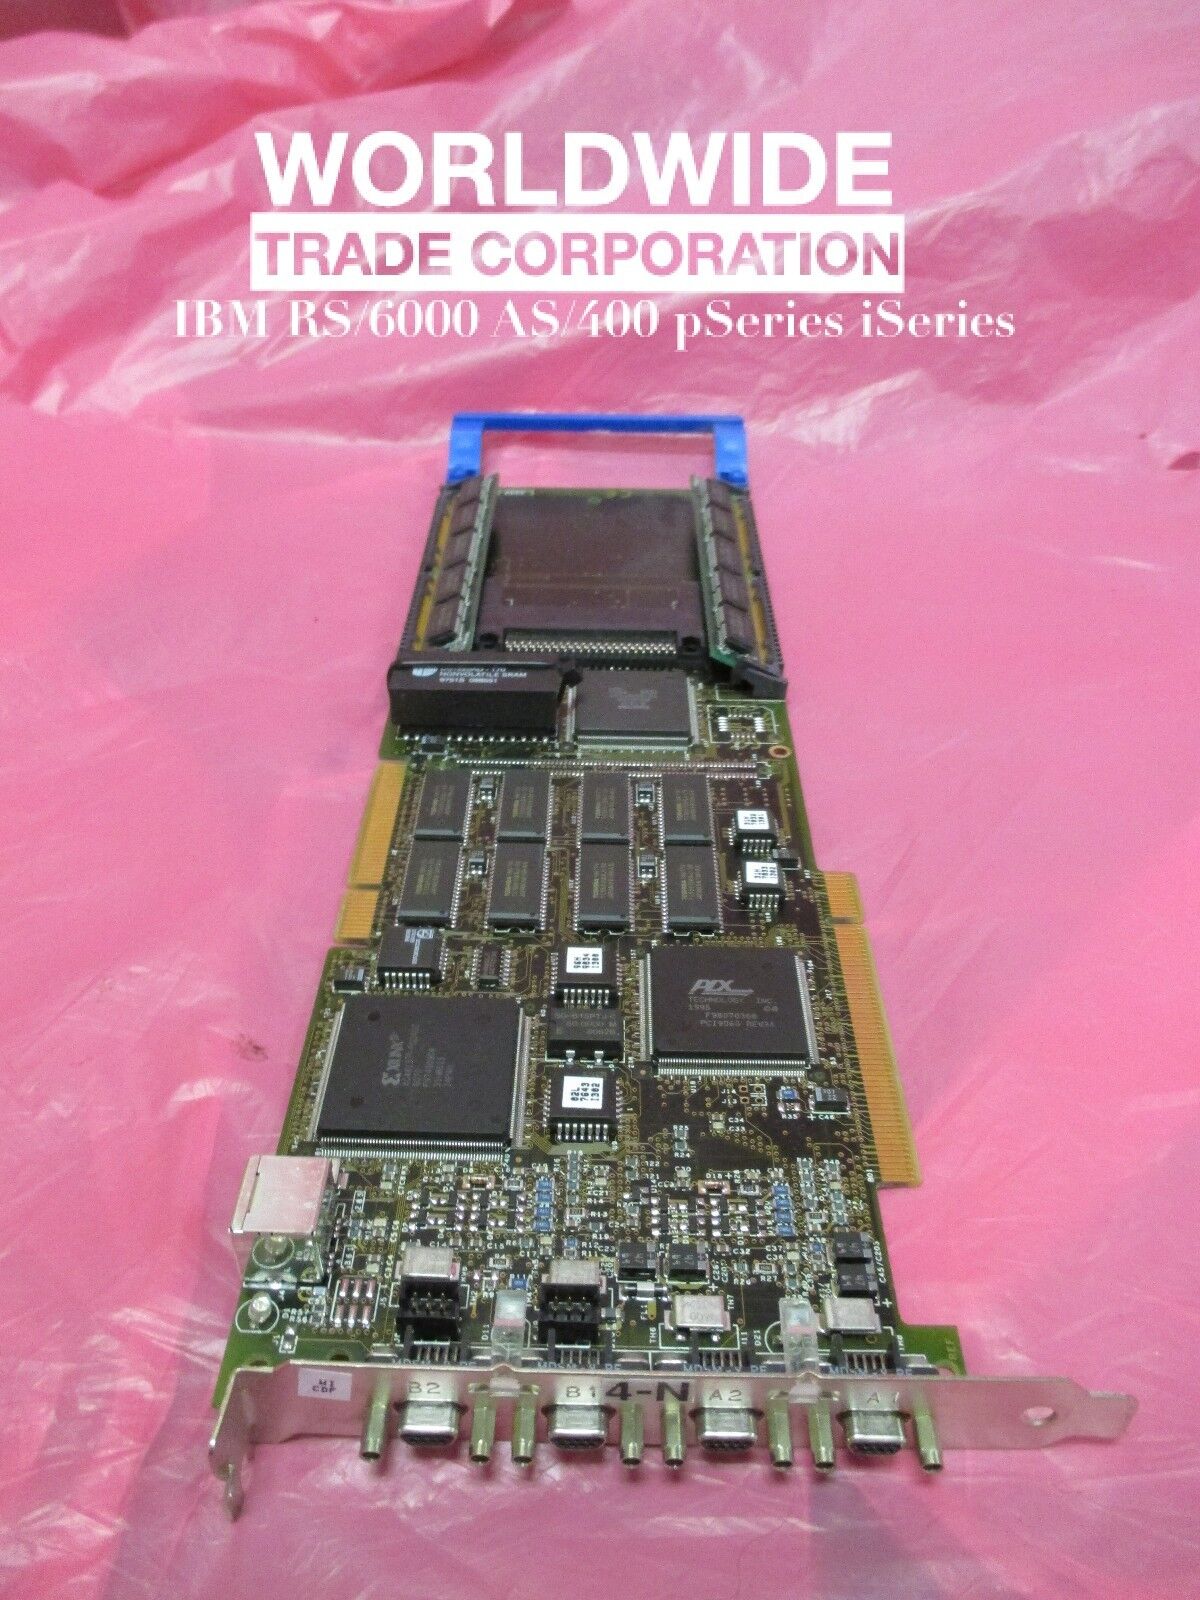 IBM 25L5814 SSA PCI Multi-Initiator/RAID EL Adapter (Type 4-N) pSeries RS6000